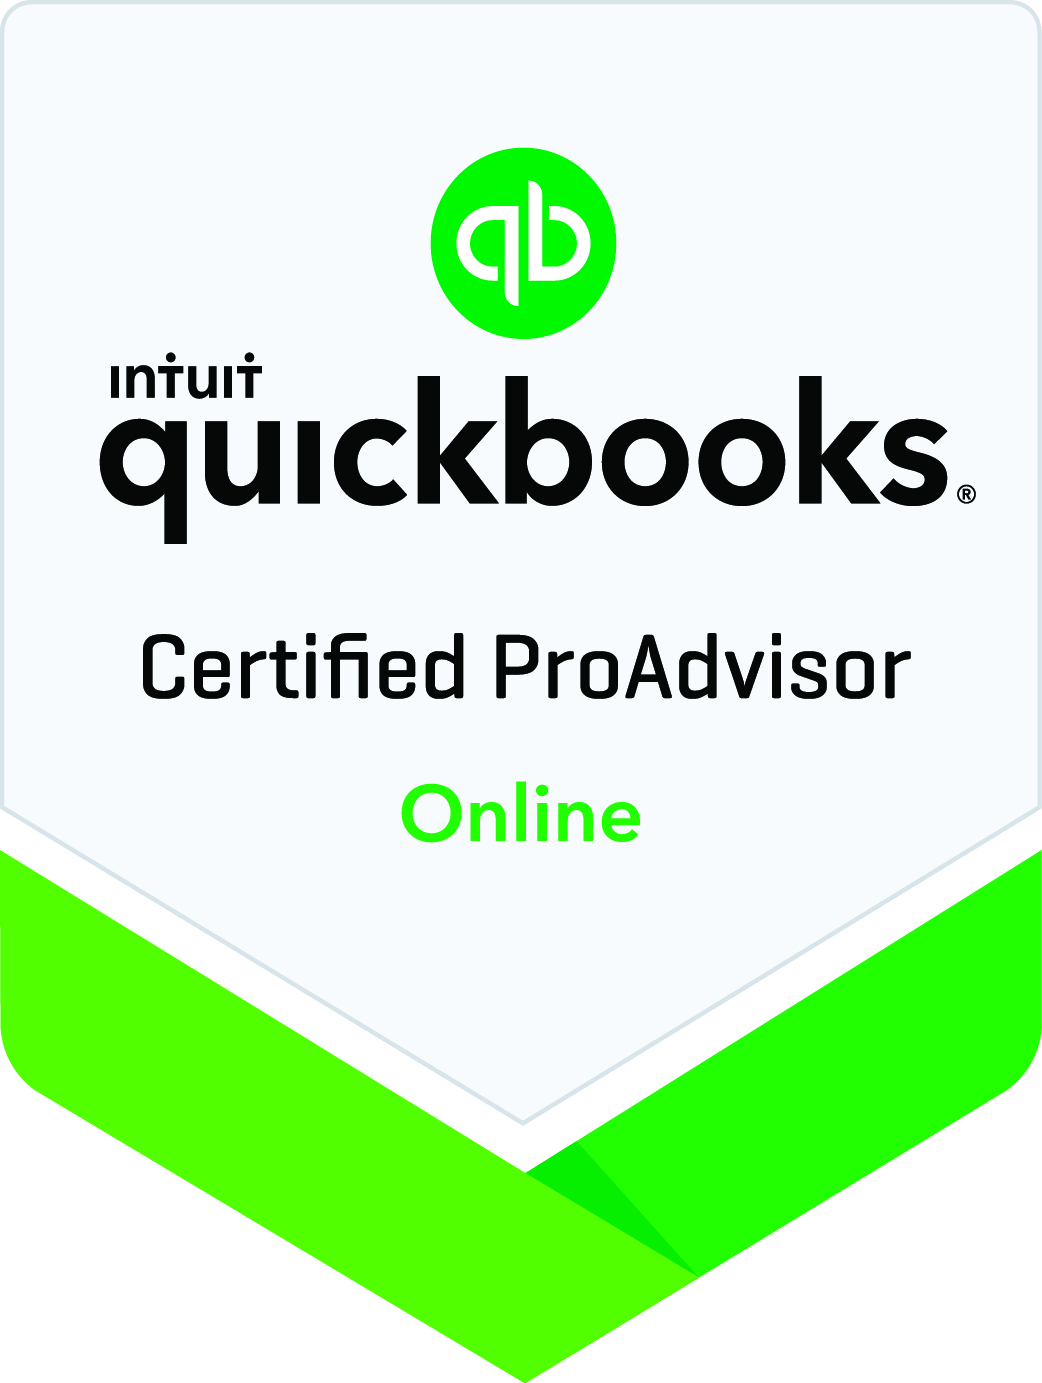 Intuit Quickbooks Certified ProAdvisor Online